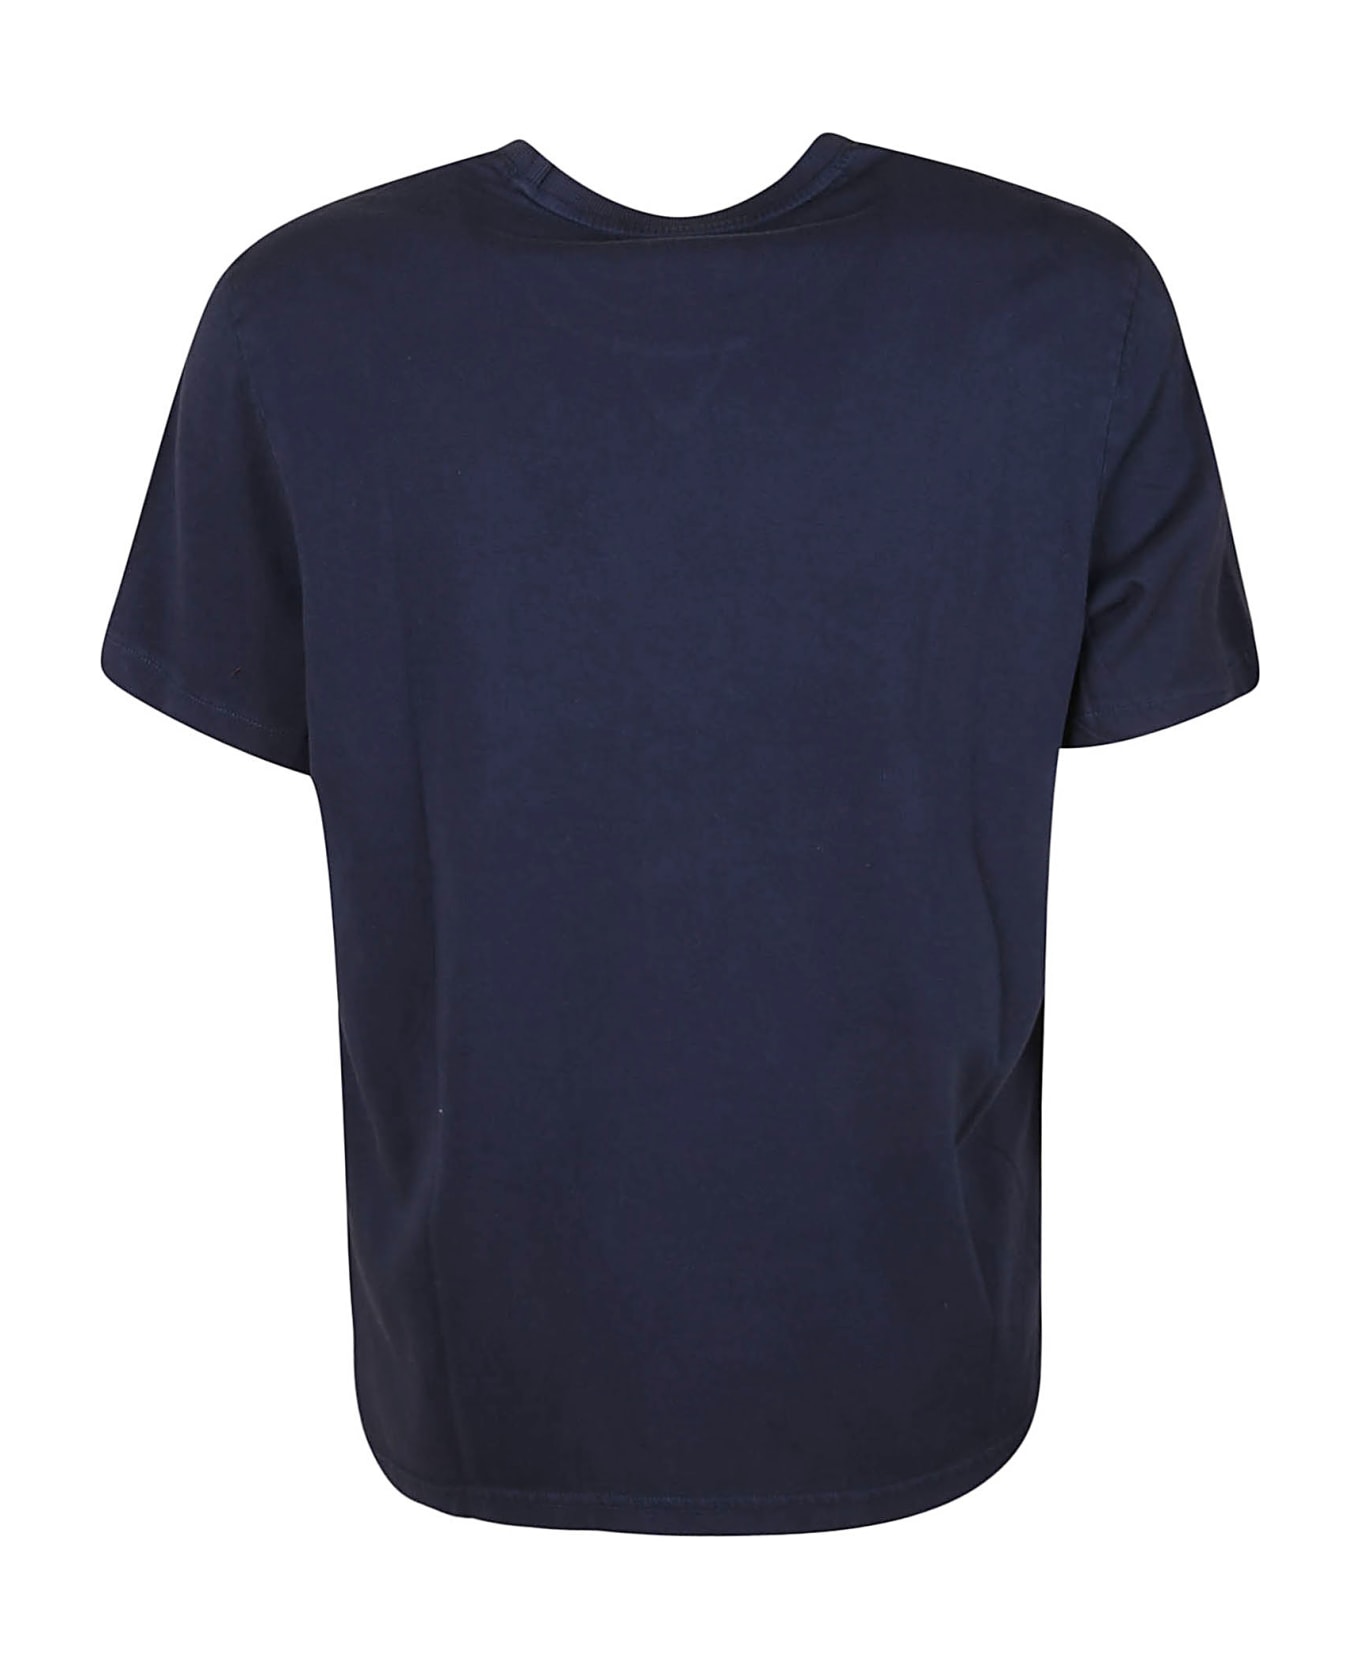 Michael Kors Spring 22 T-shirt - Midnight